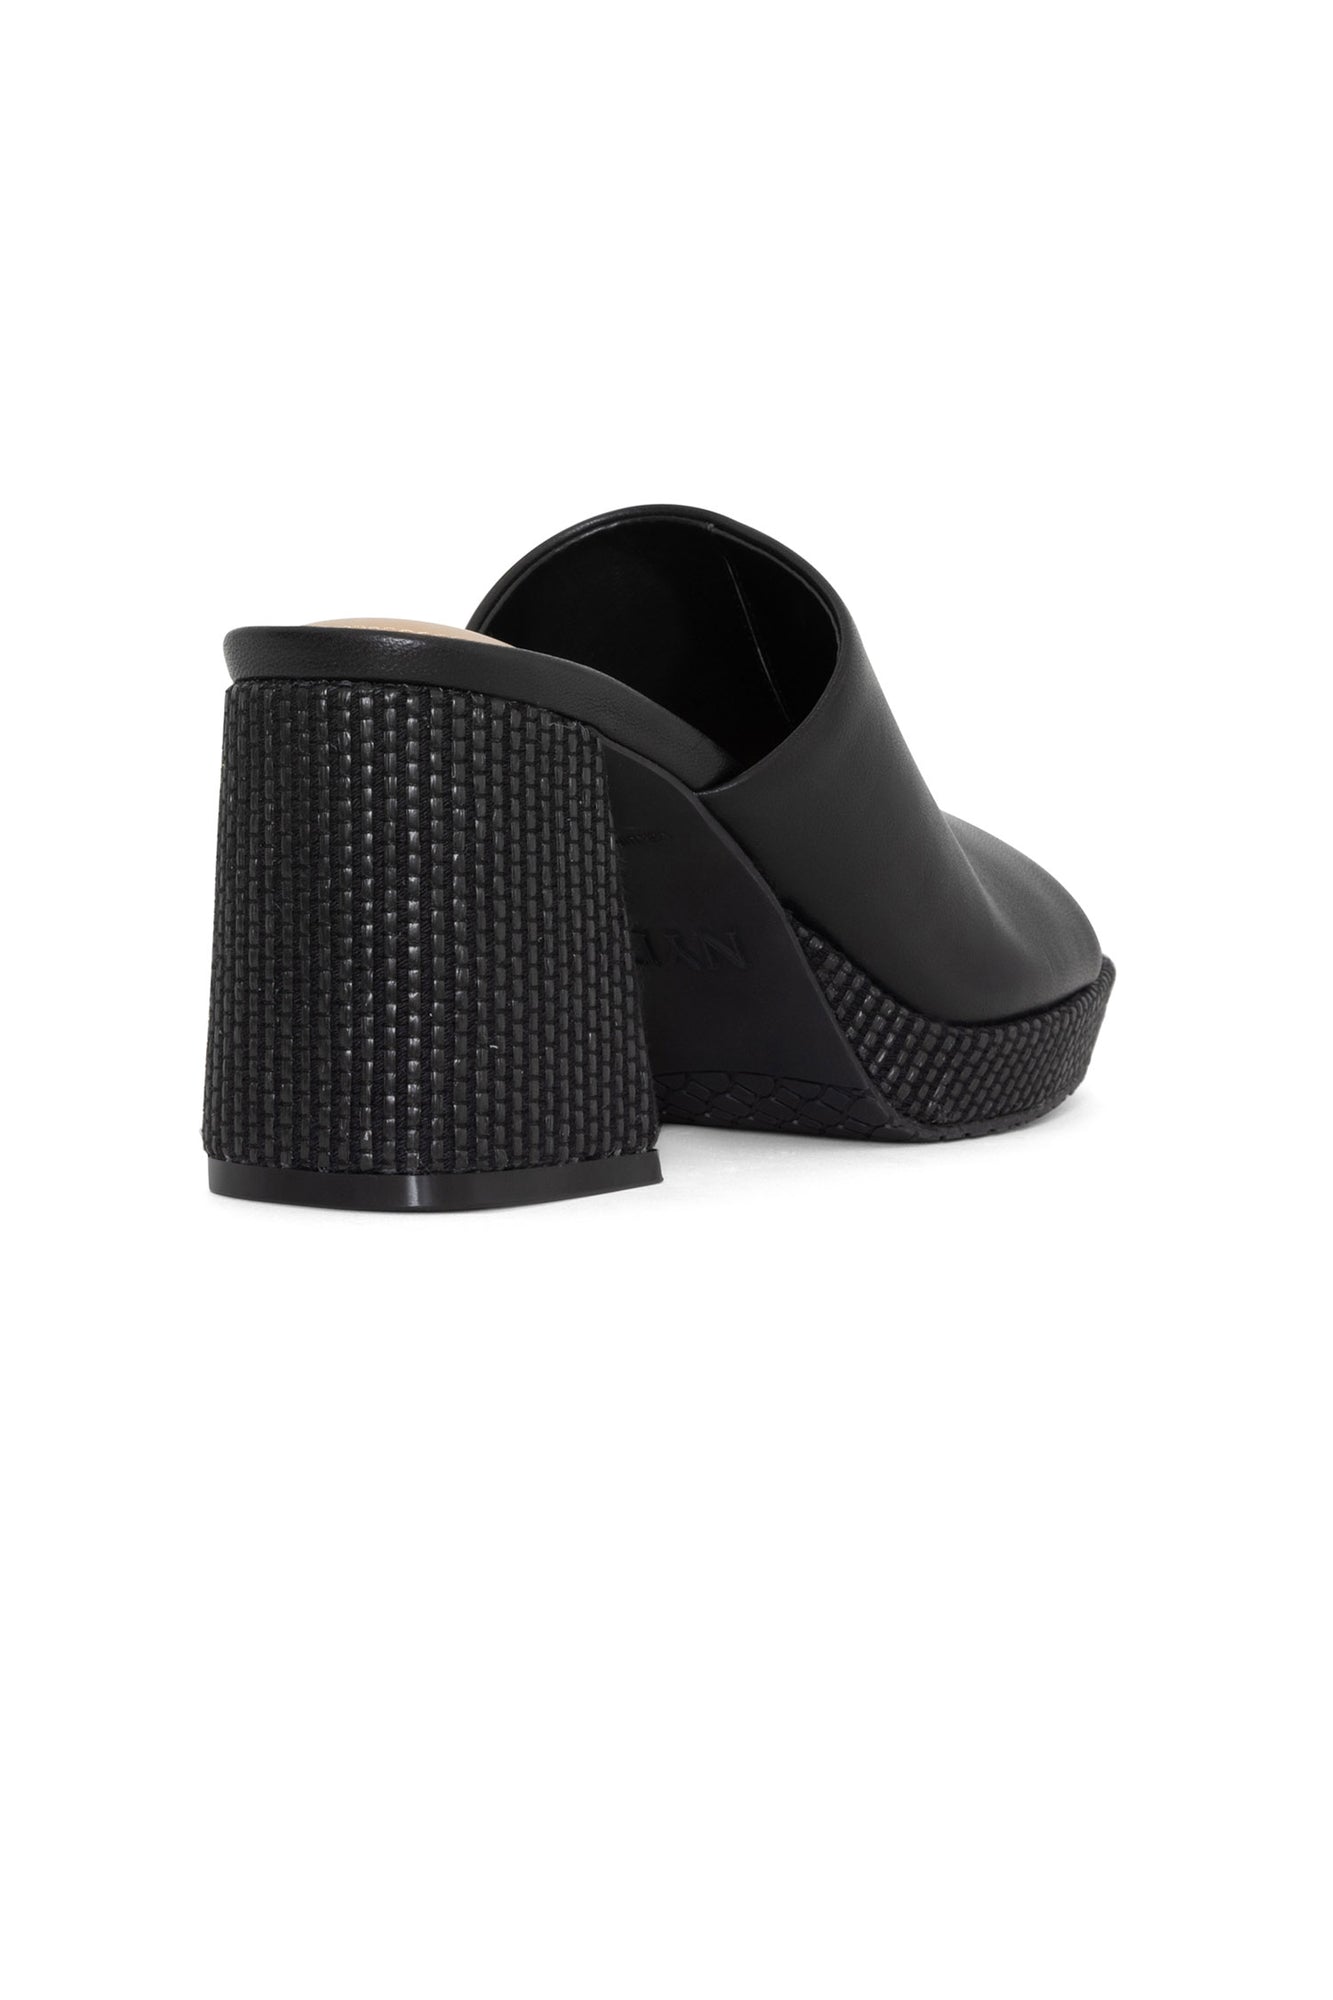 NYDJ Dewi Platform Sandals In Nappa Leather - Black